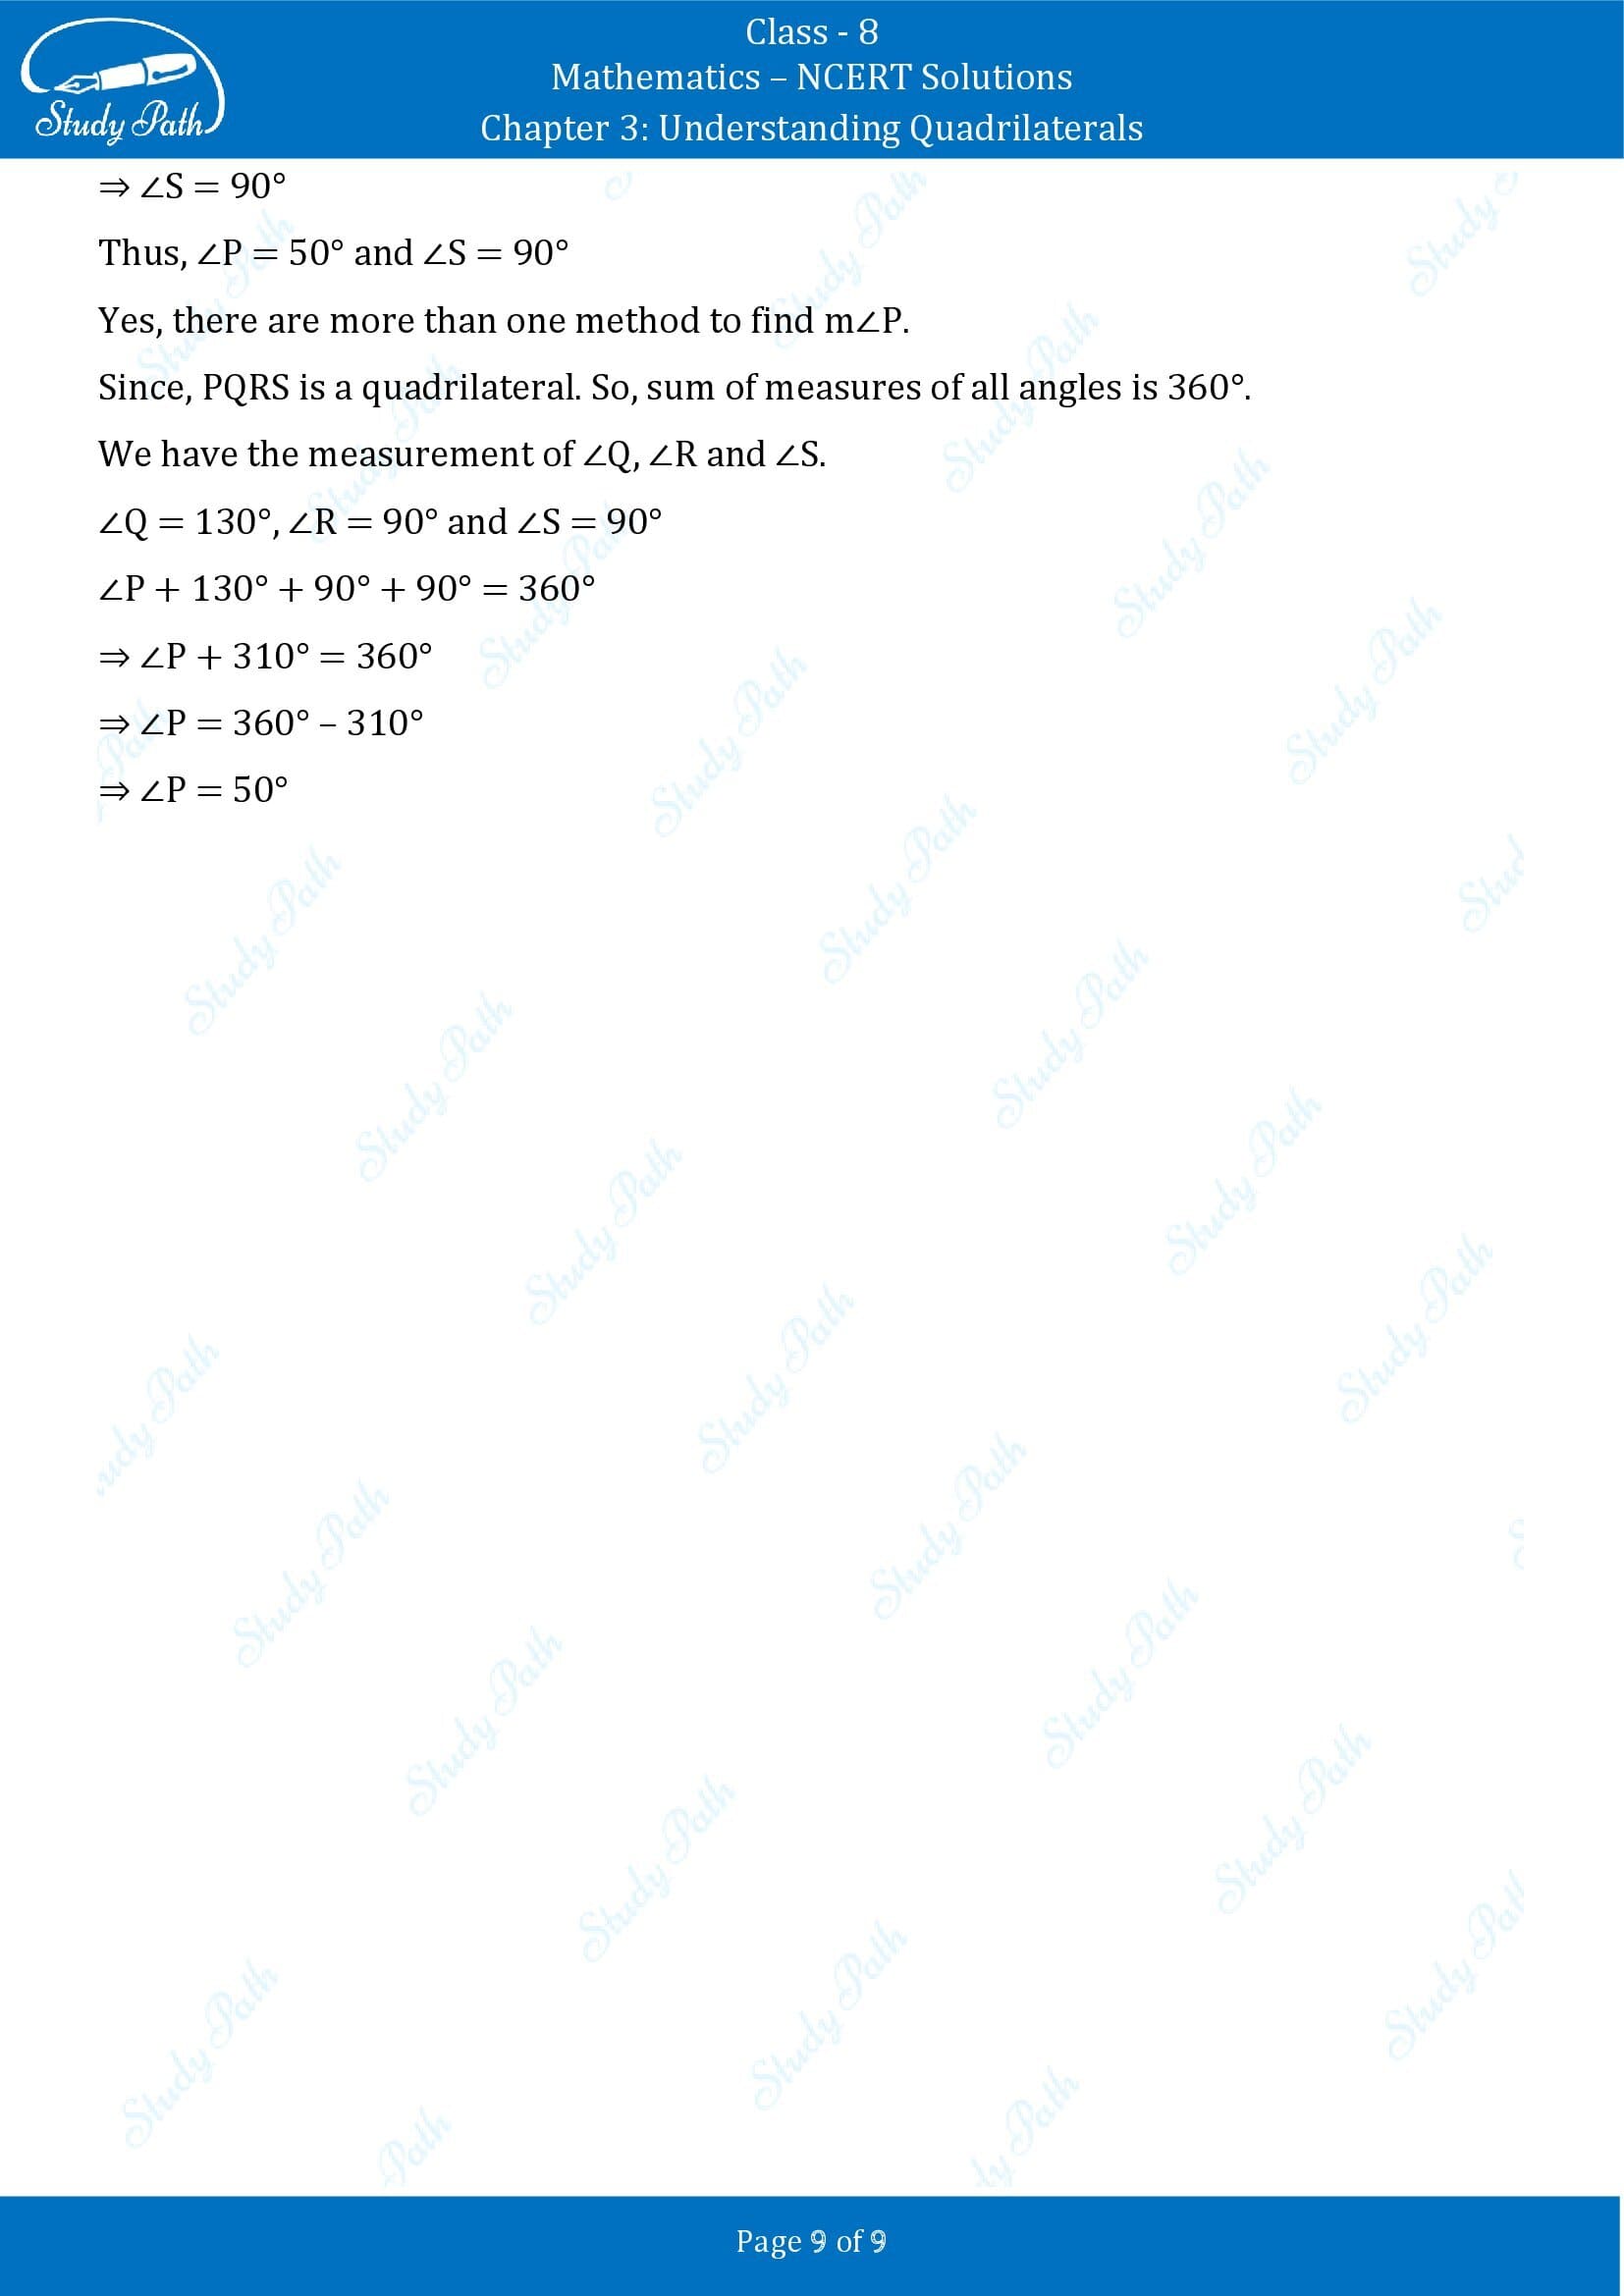 NCERT Solutions for Class 8 Maths Chapter 3 Understanding Quadrilaterals Exercise 3.3 00009